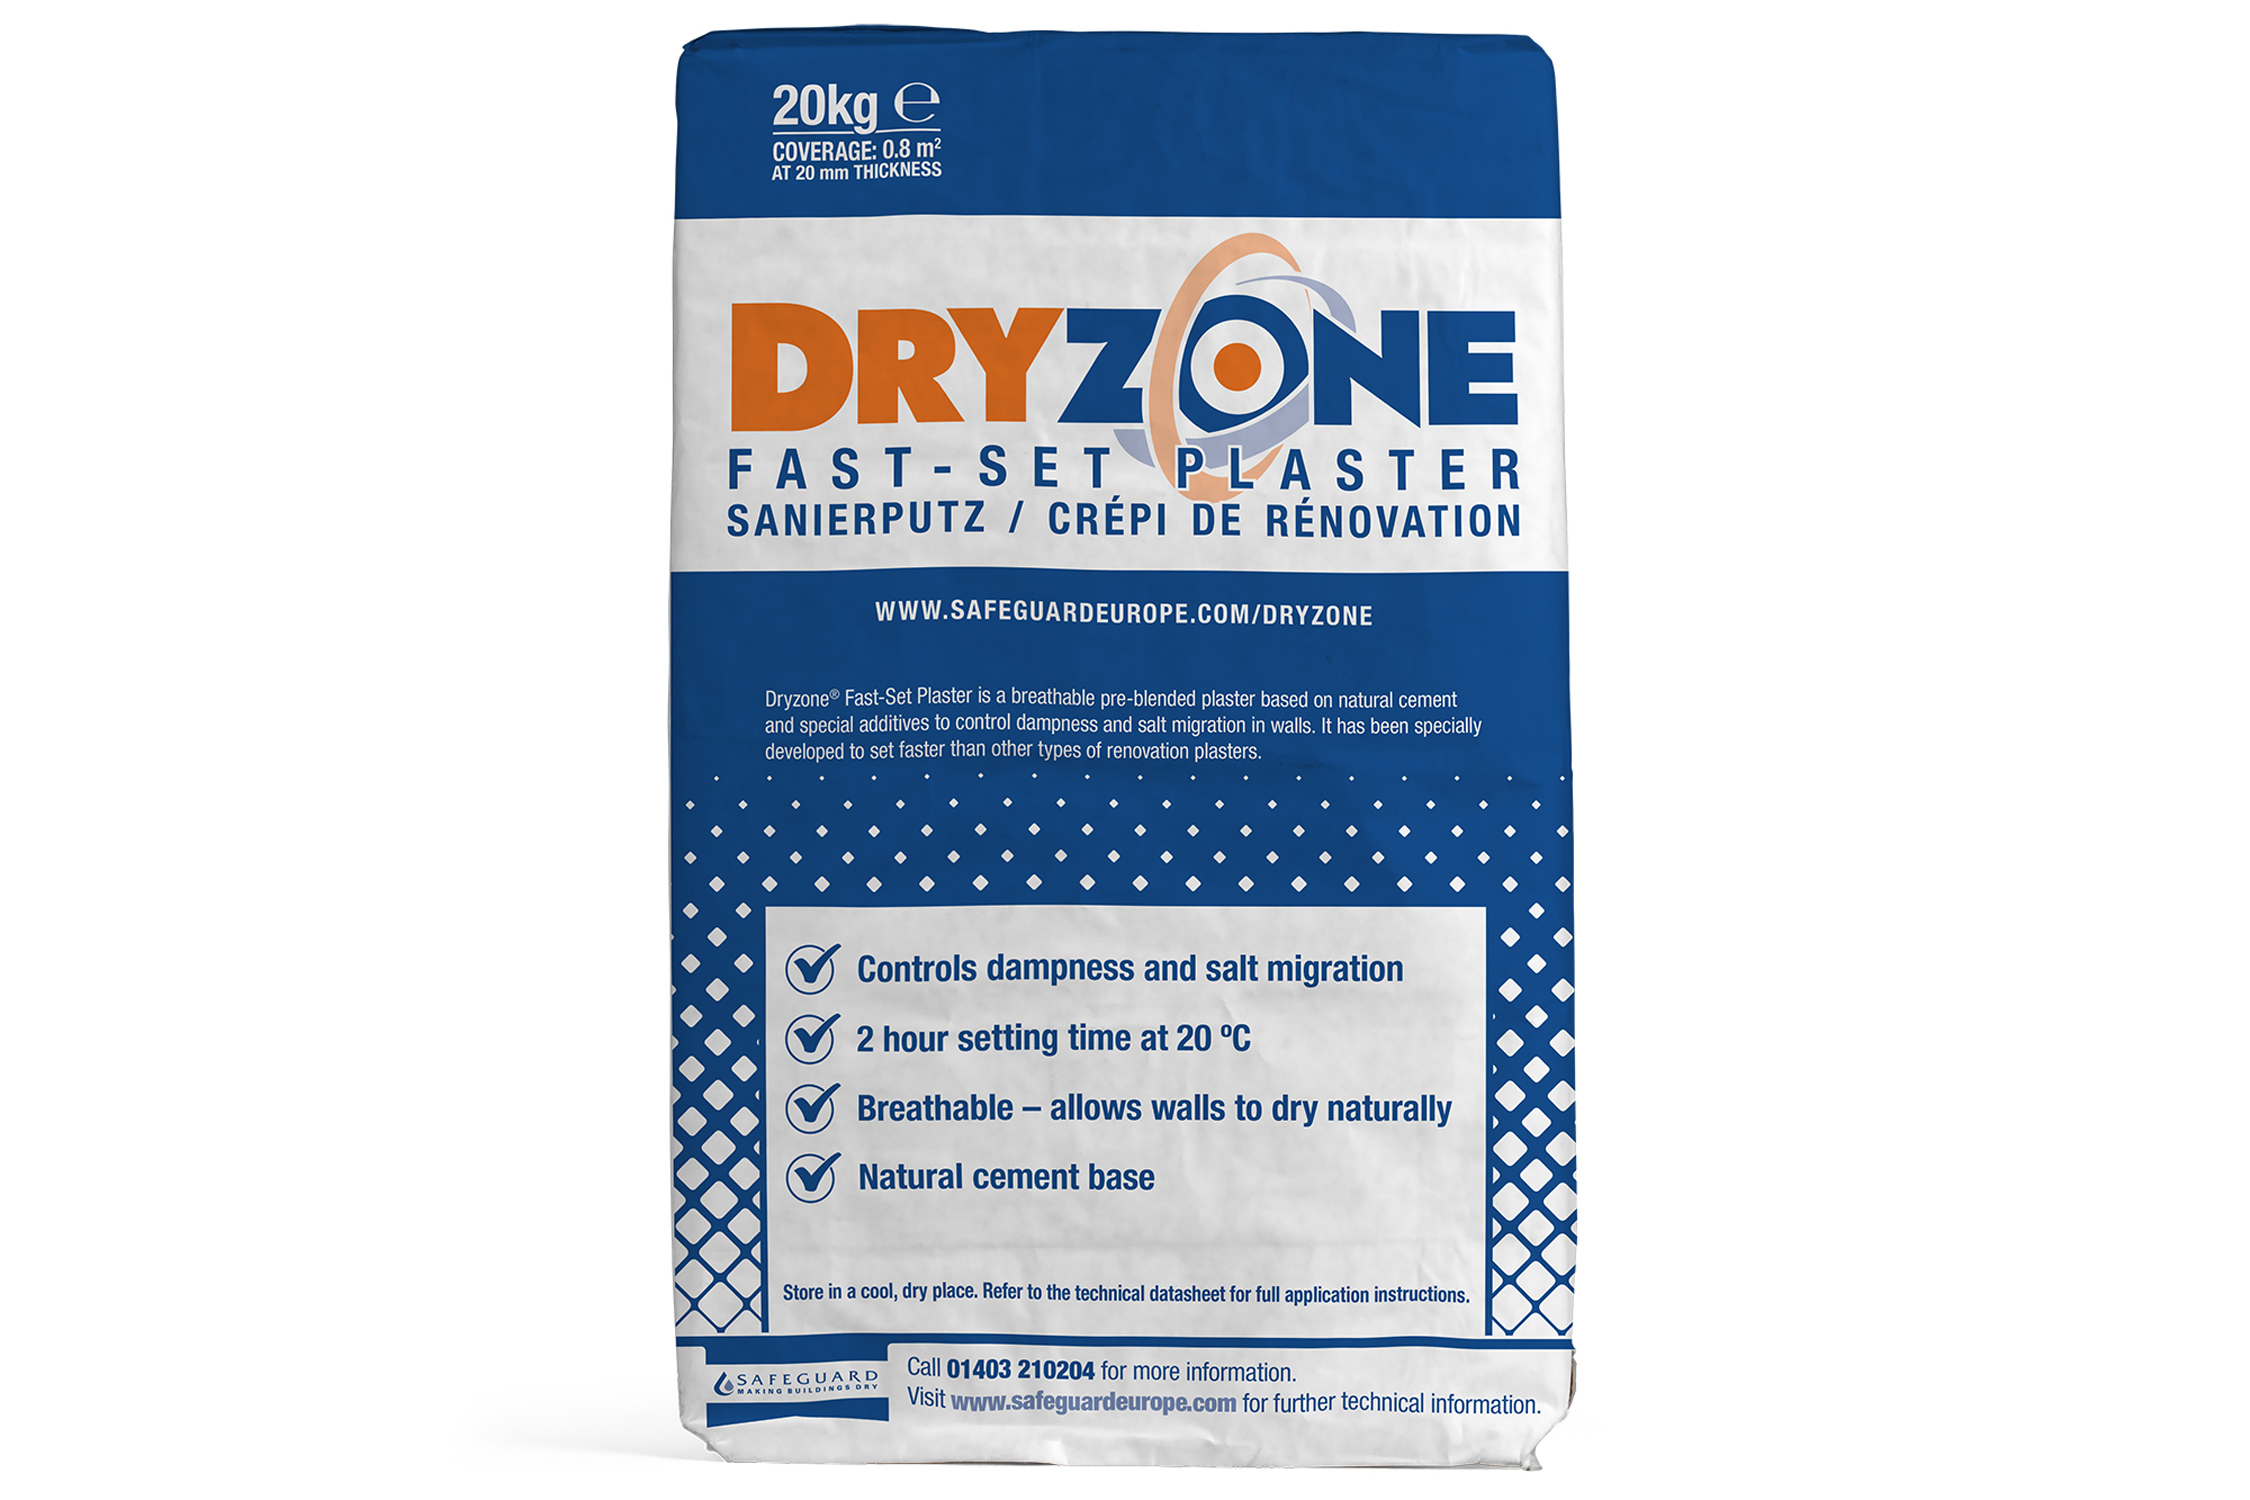 Safeguard's Dryzone Fast-Set Plaster